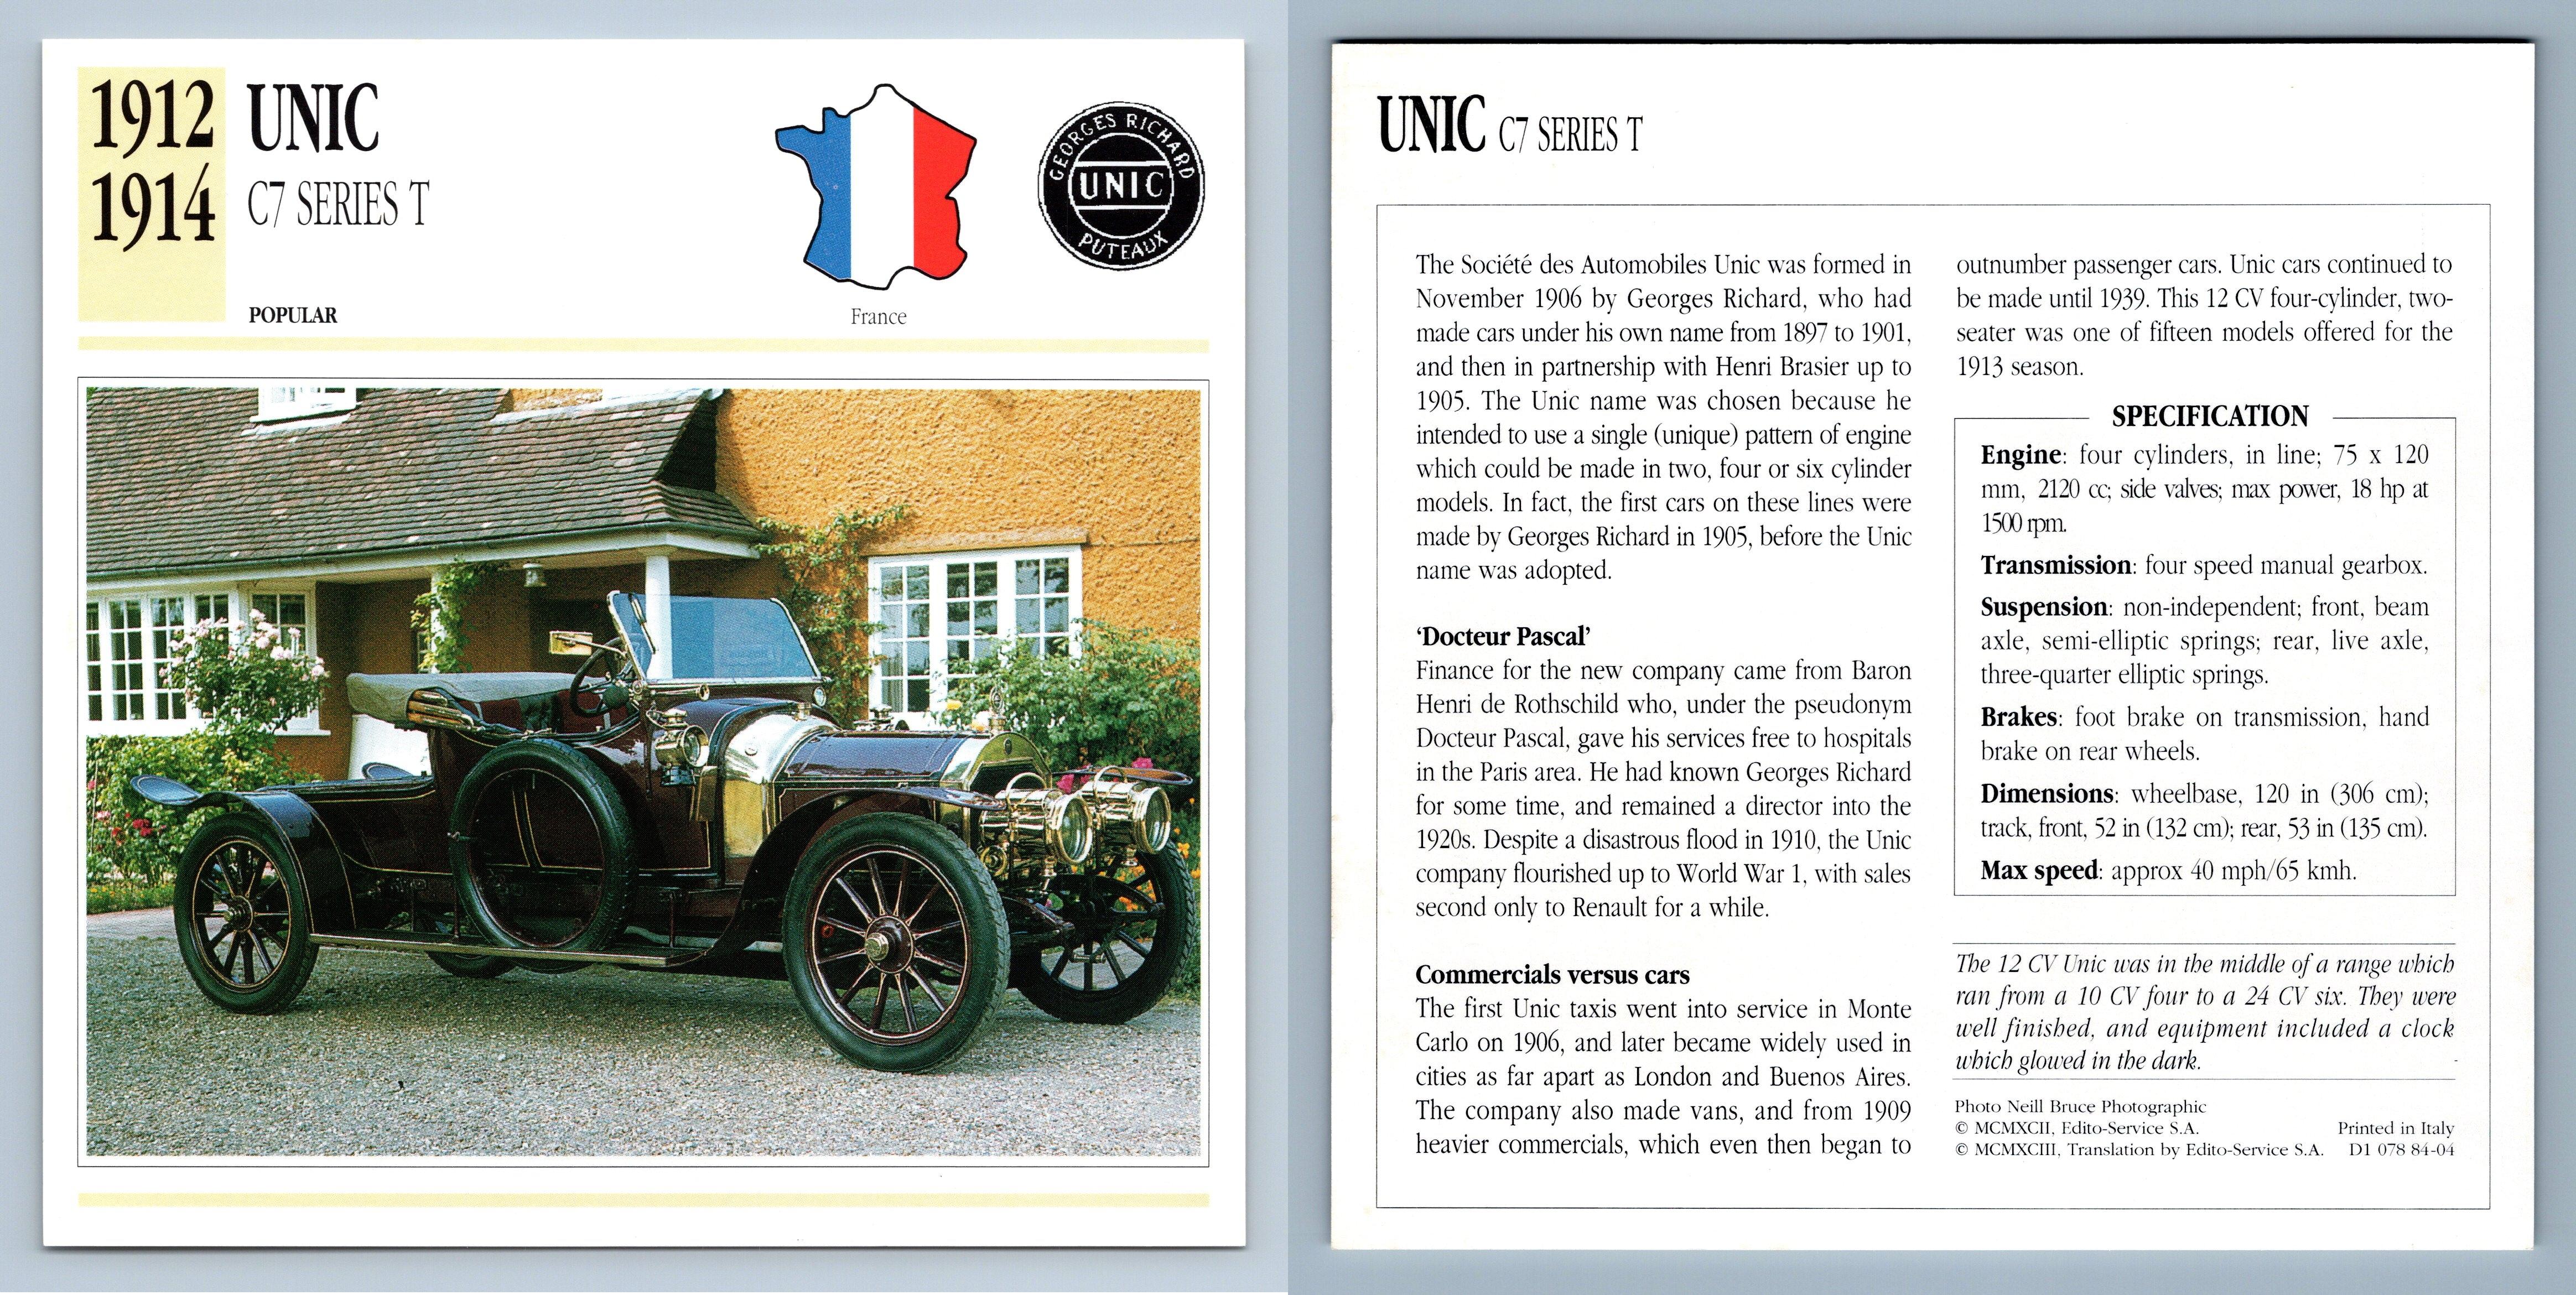 Unic - C7 Series T - 1912-14 Popular Collectors Club Card